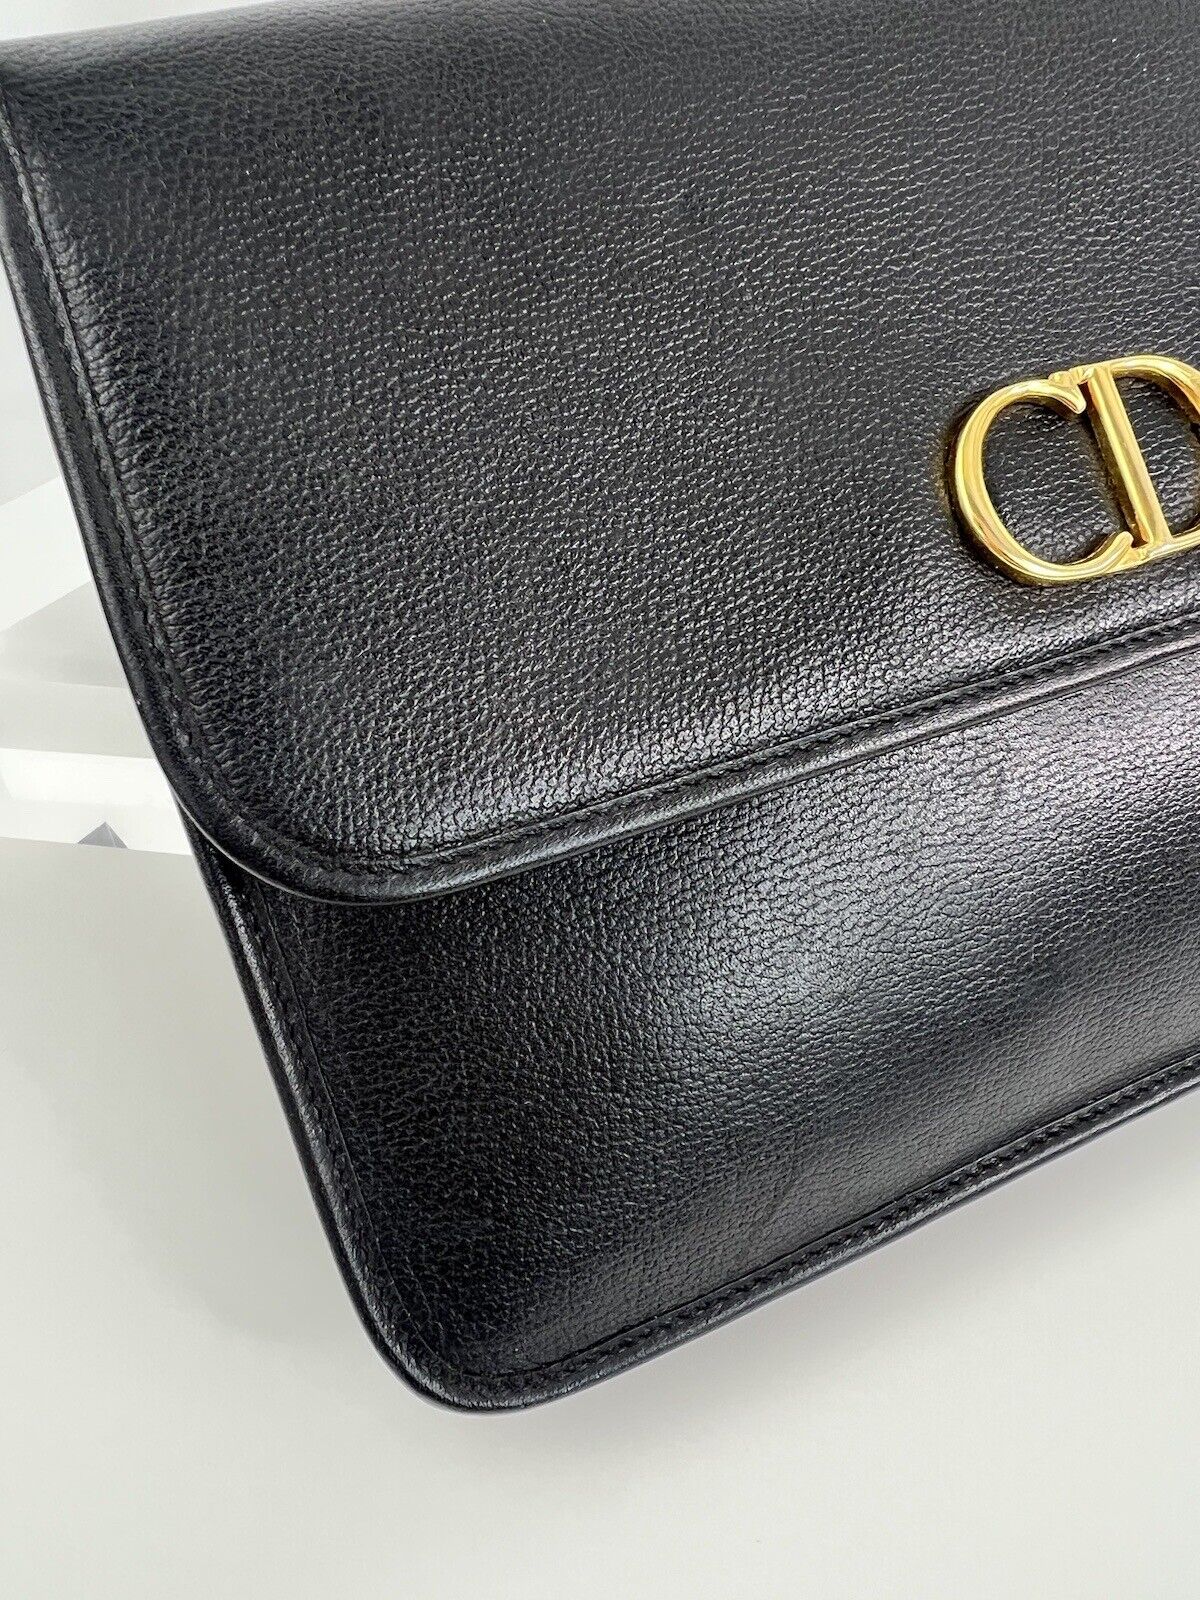 【SOLD OUT】Christian Dior Vintage  3 Ways Shoulder, Cross body, Clutch Bag Made in France